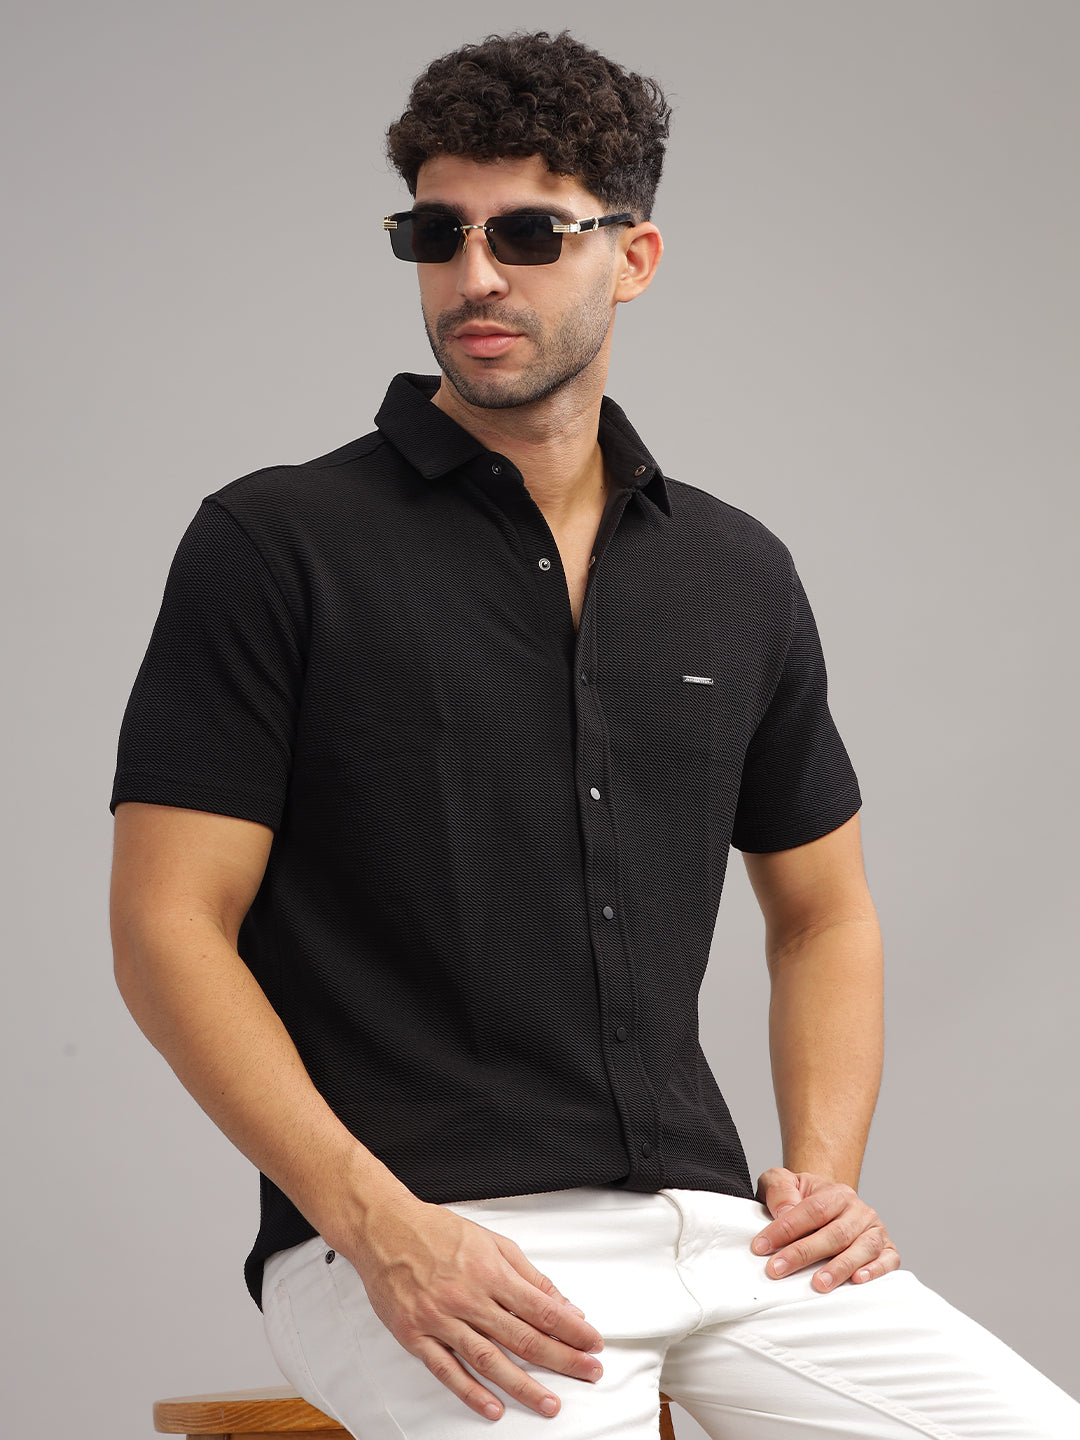 Men's Black Self Design Shirt With Collar